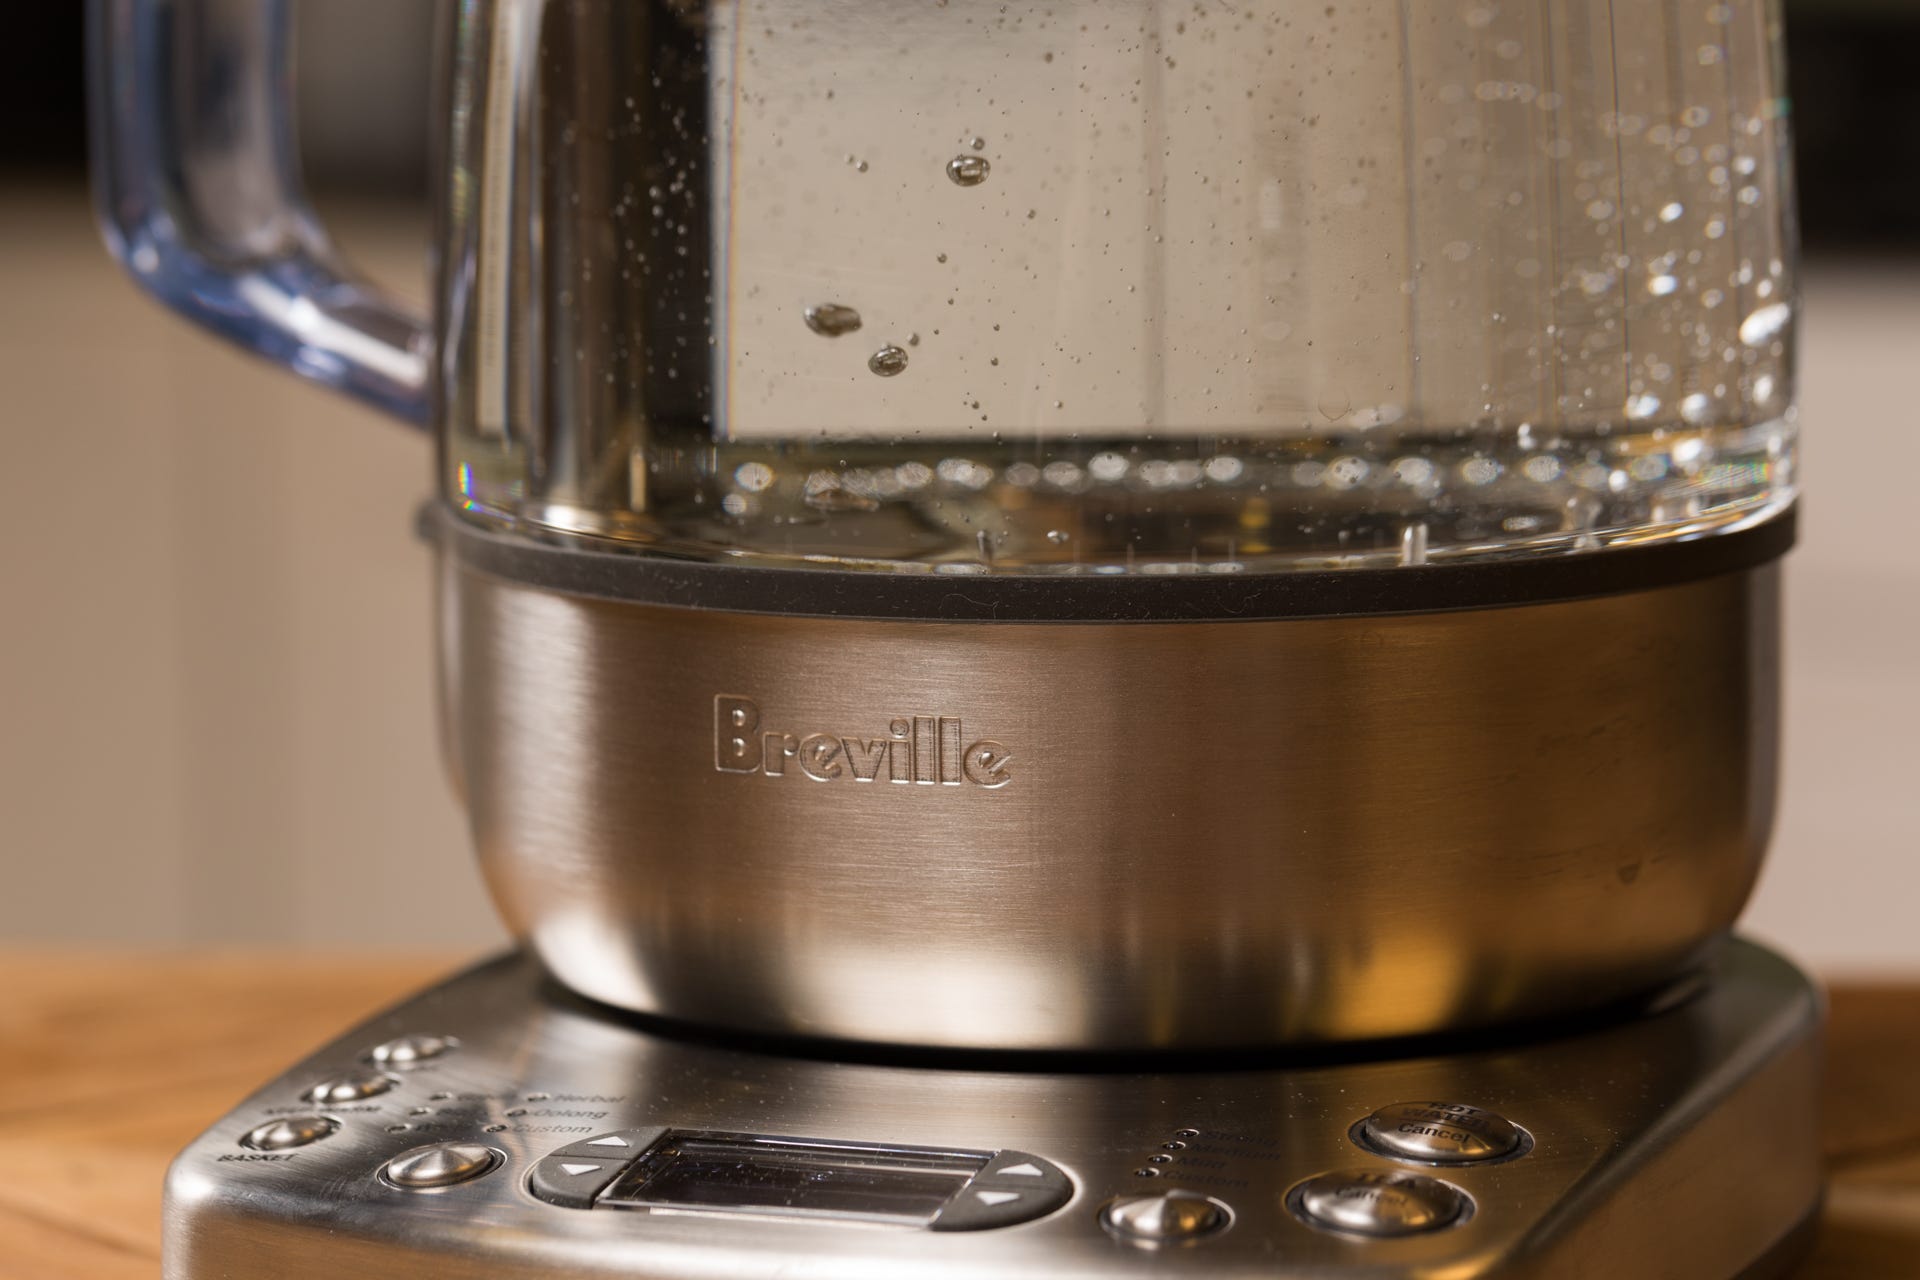 breville-tea-maker-product-photos-3.jpg